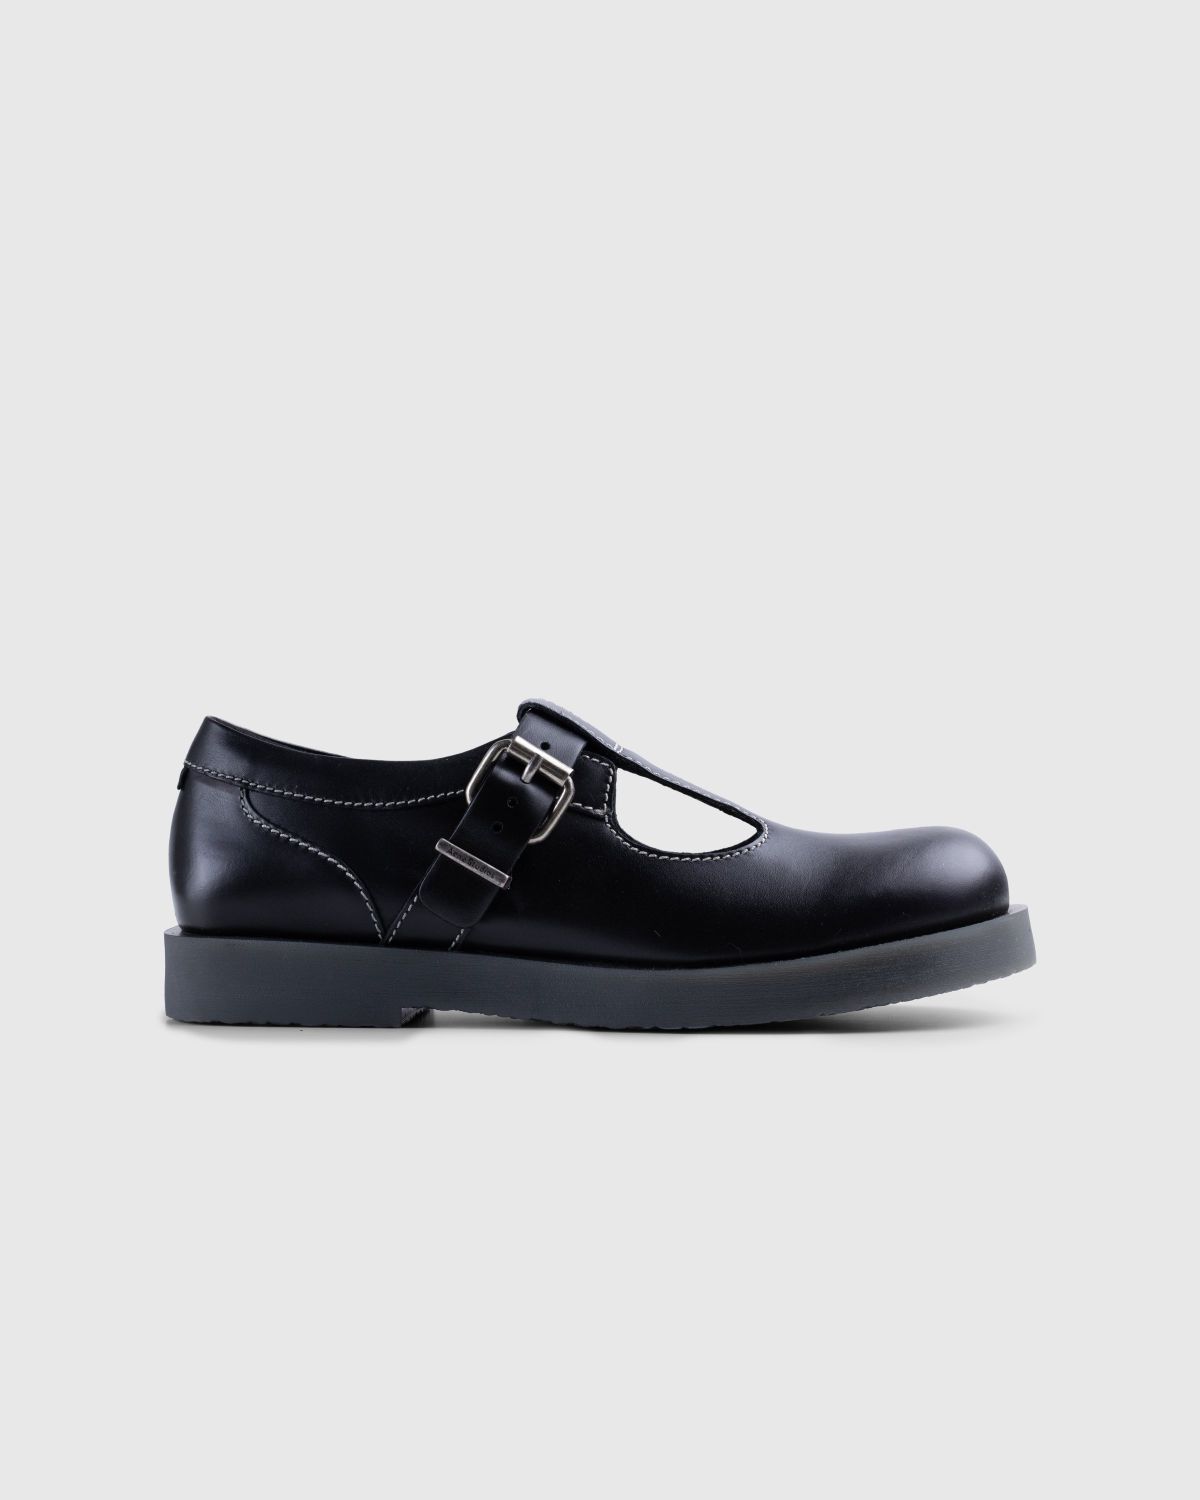 Acne Studios – Berylab Leather Buckle Shoes Black - Shoes - Black - Image 1